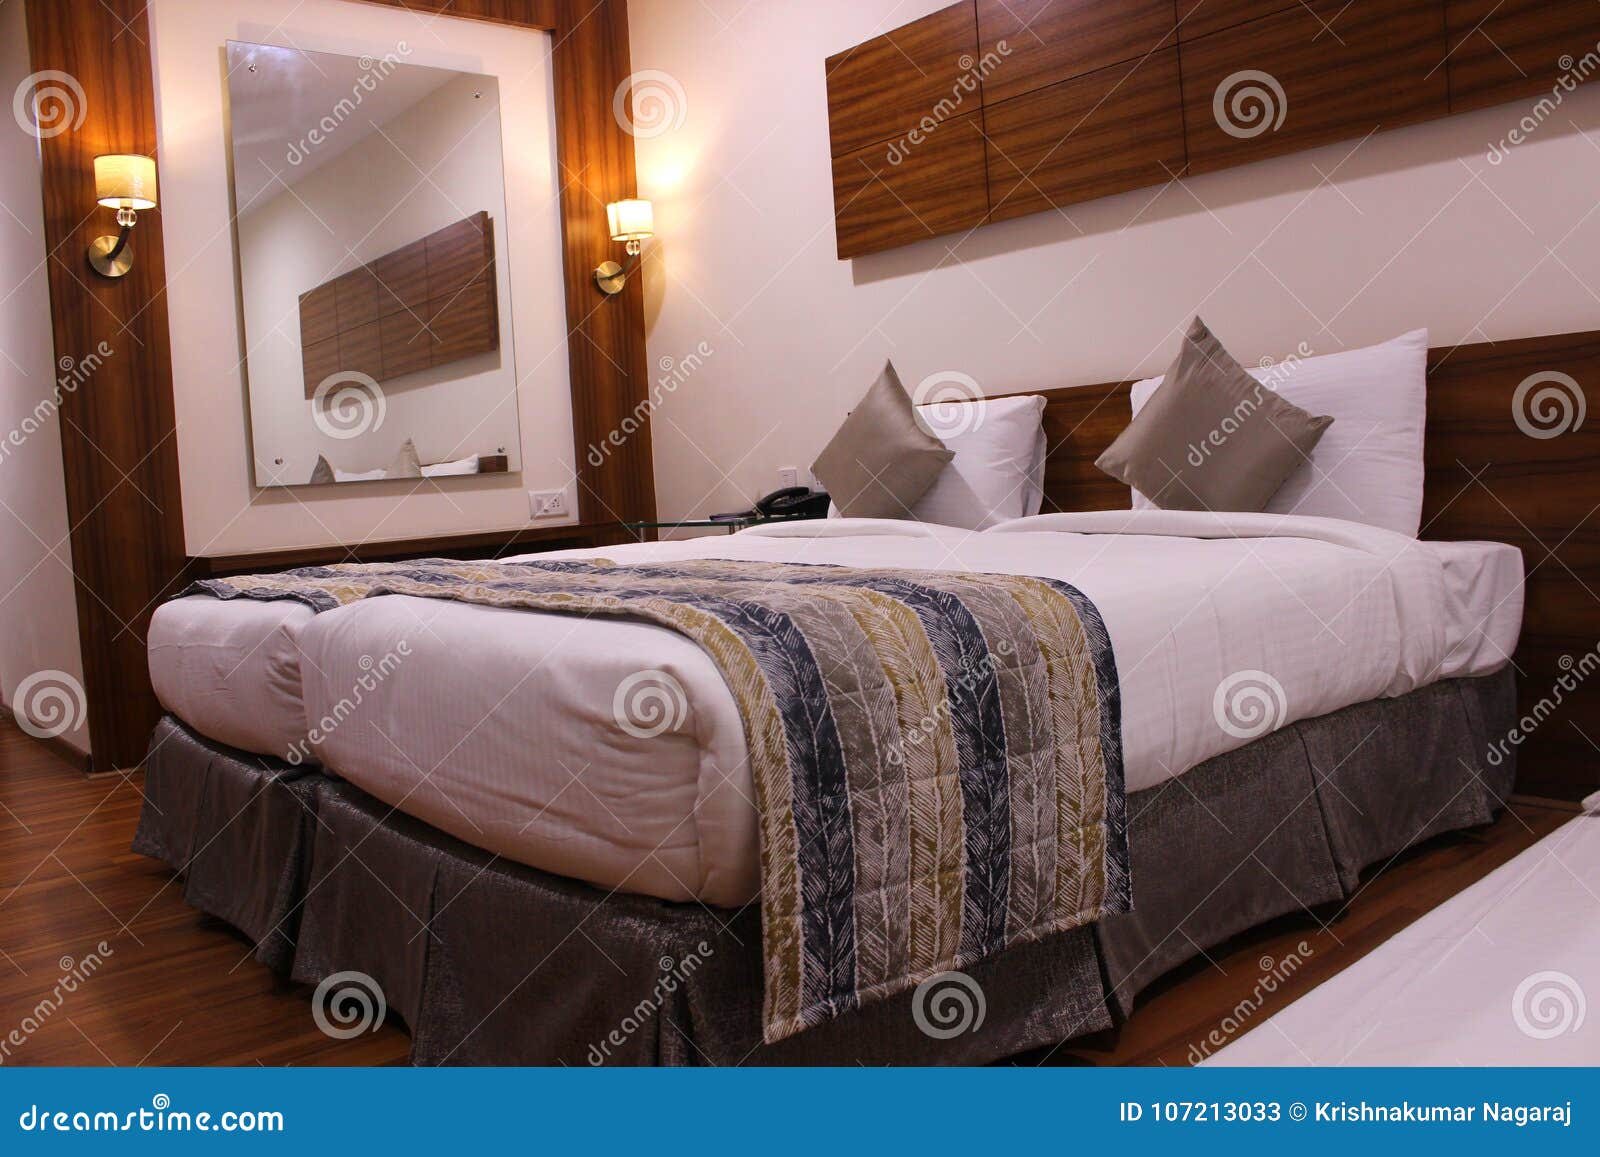 Master Bedroom In Luxury Room Stock Image Image Of